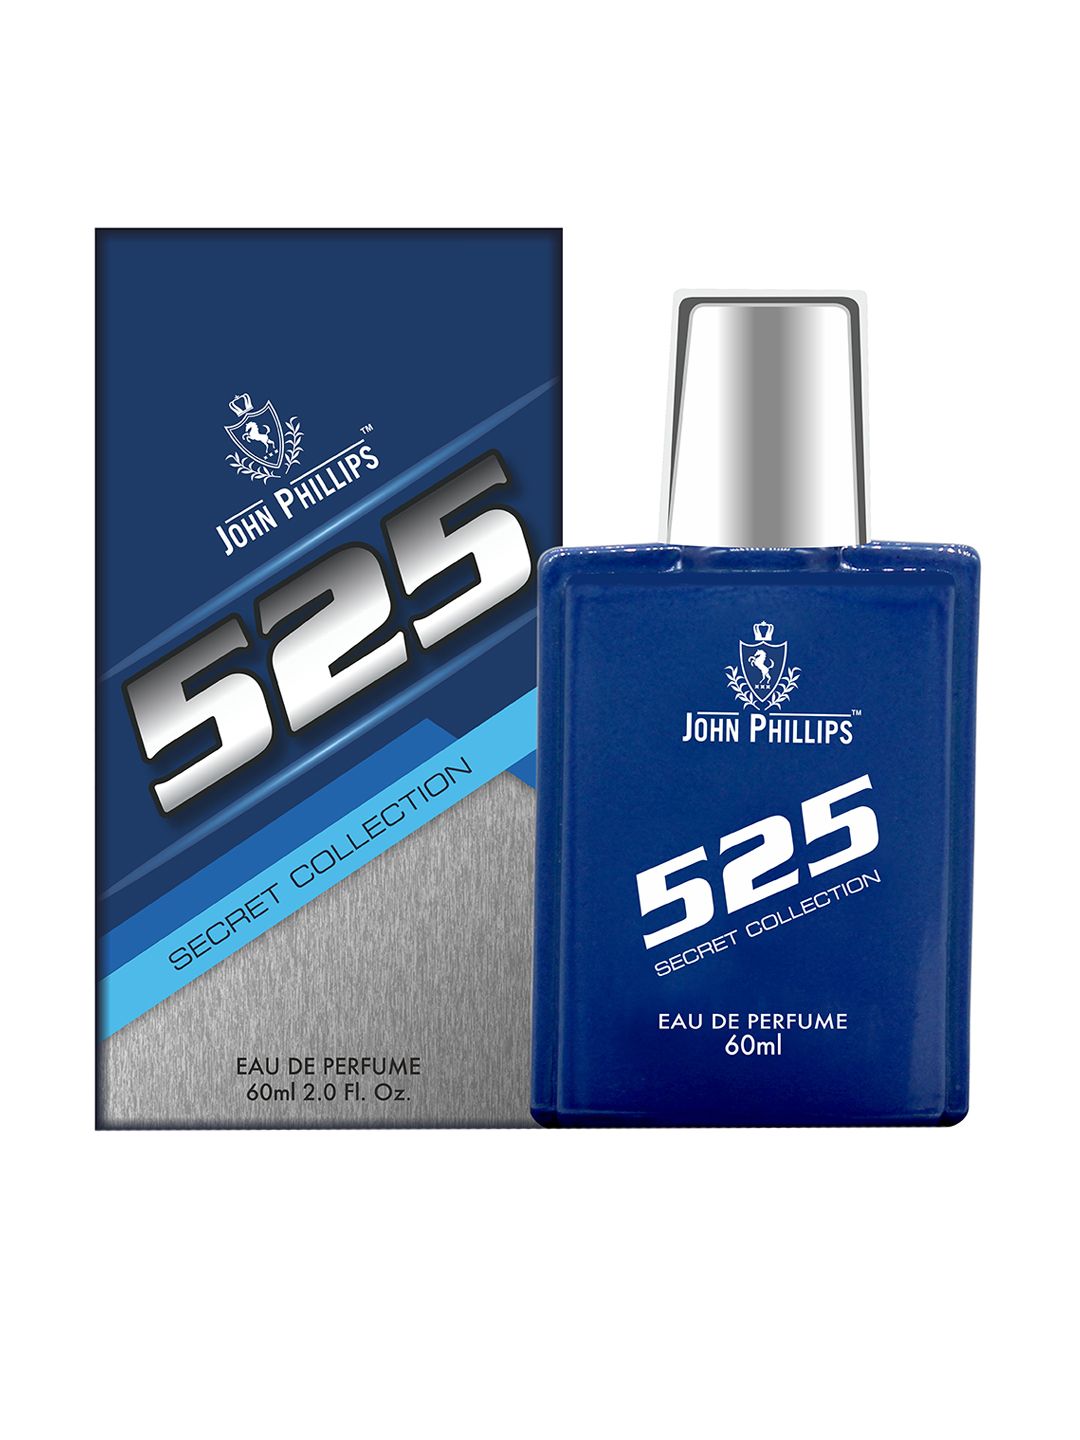 JOHN PHILLIPS 525 Secret Collection Eau De Perfume - 60ml Price in India